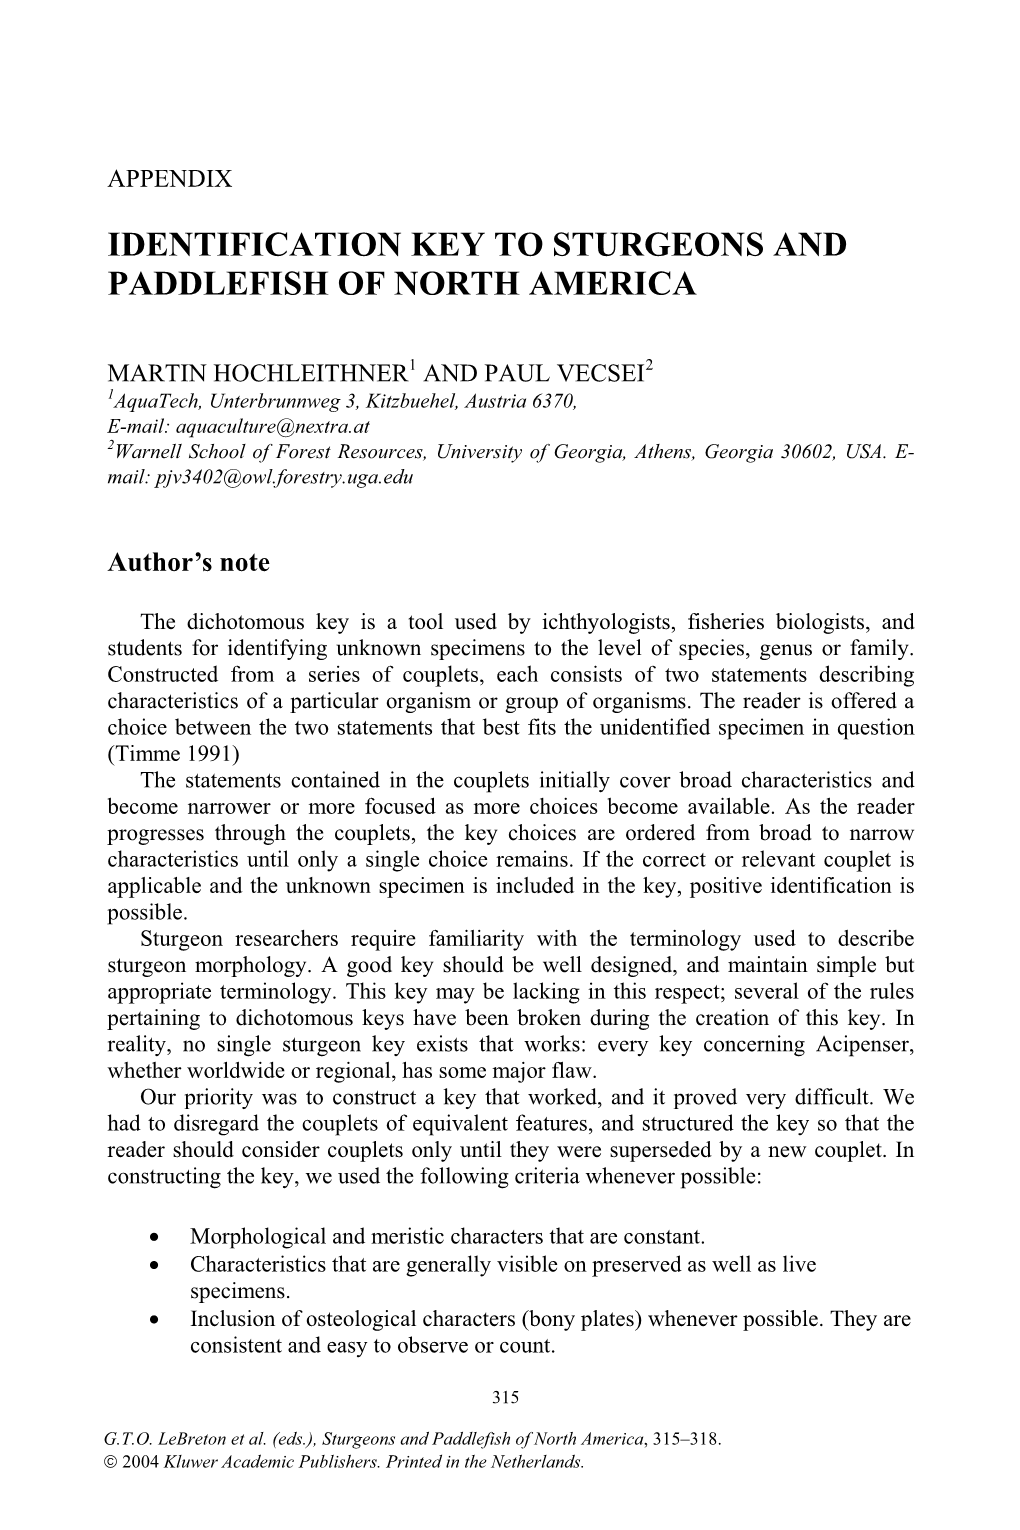 Identification Key to Sturgeons and Paddlefish of North America